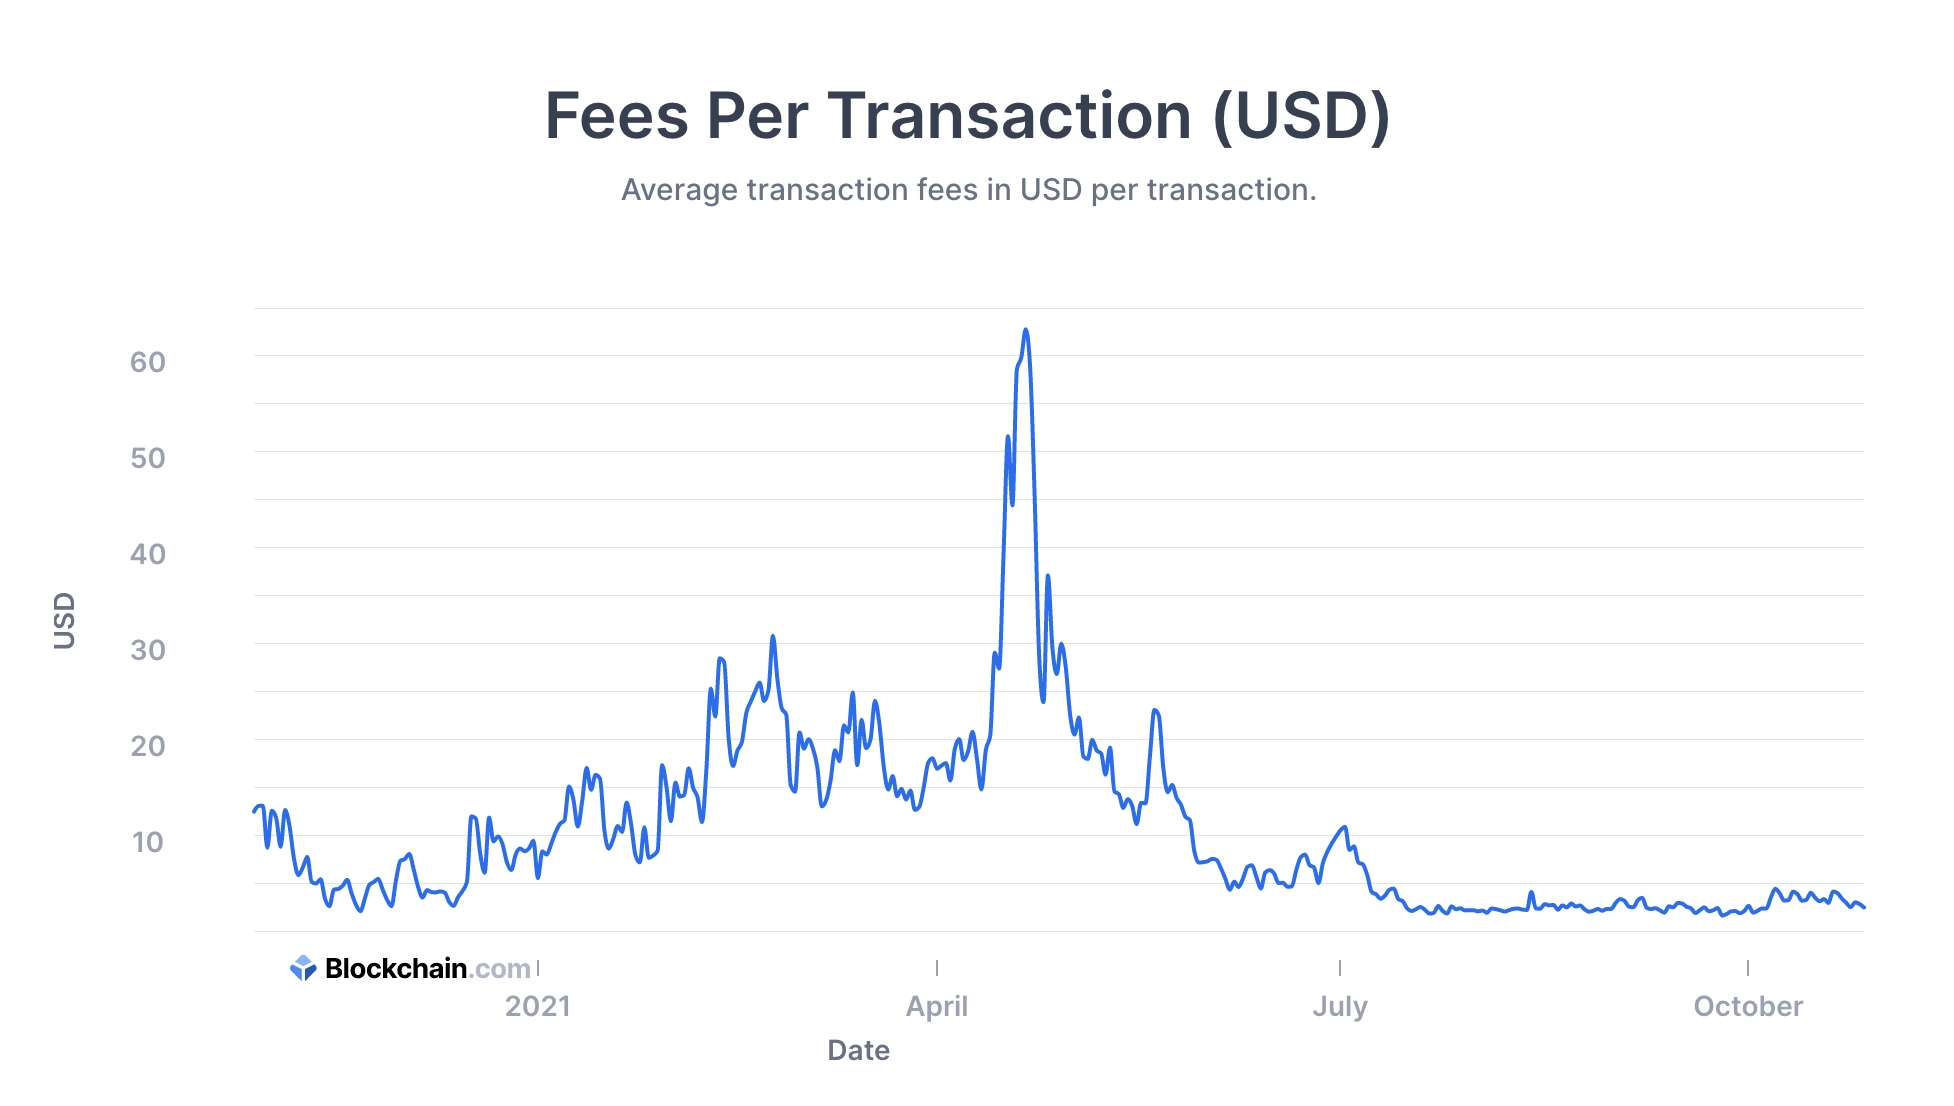 bitcoin transaction fees peak April 2021